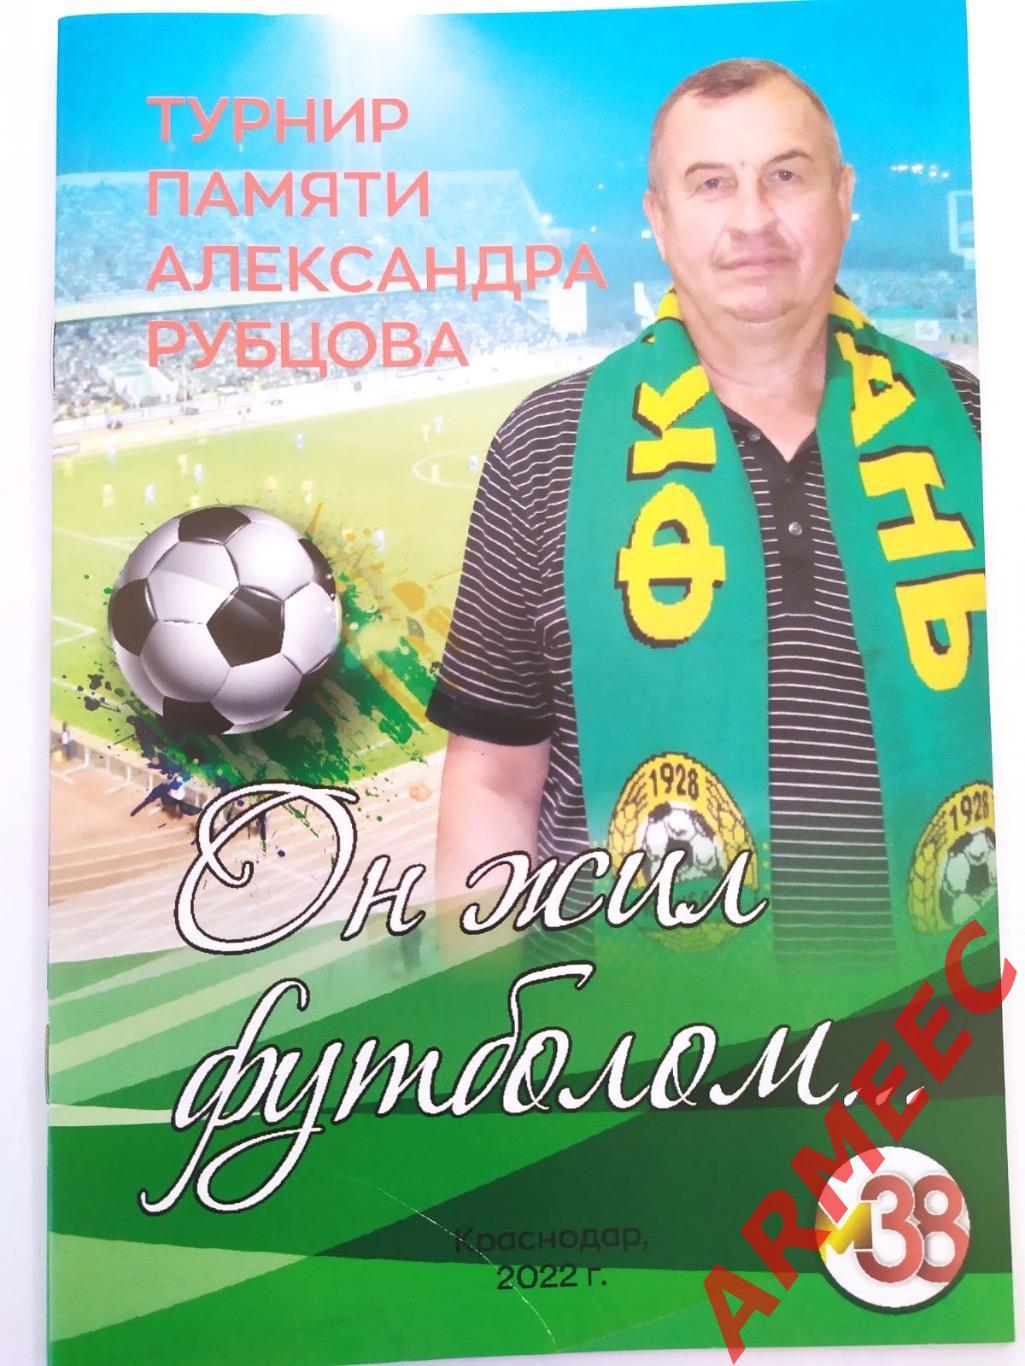 Он жил футболом футбольный турнир памяти Александра Рубцова г.Краснодар 2022 год